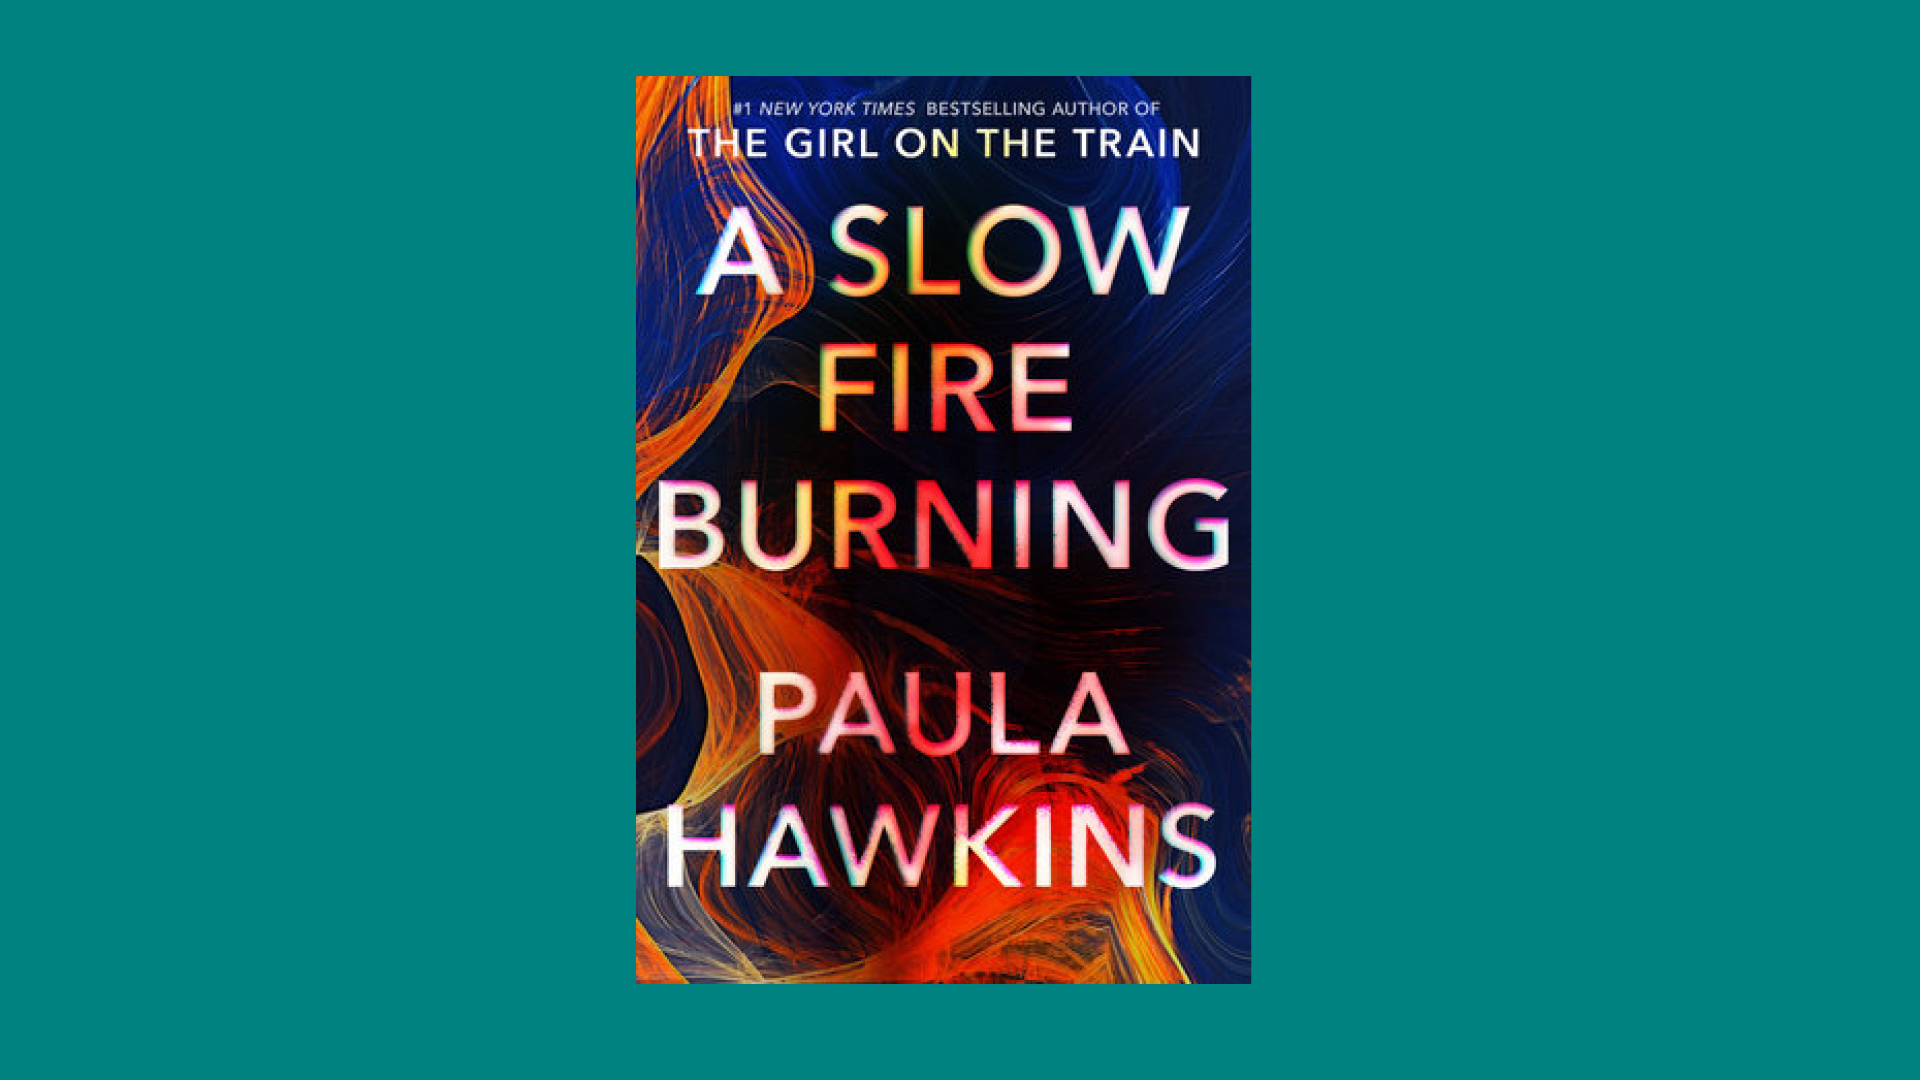 “A Slow Fire Burning” by Paula Hawkins